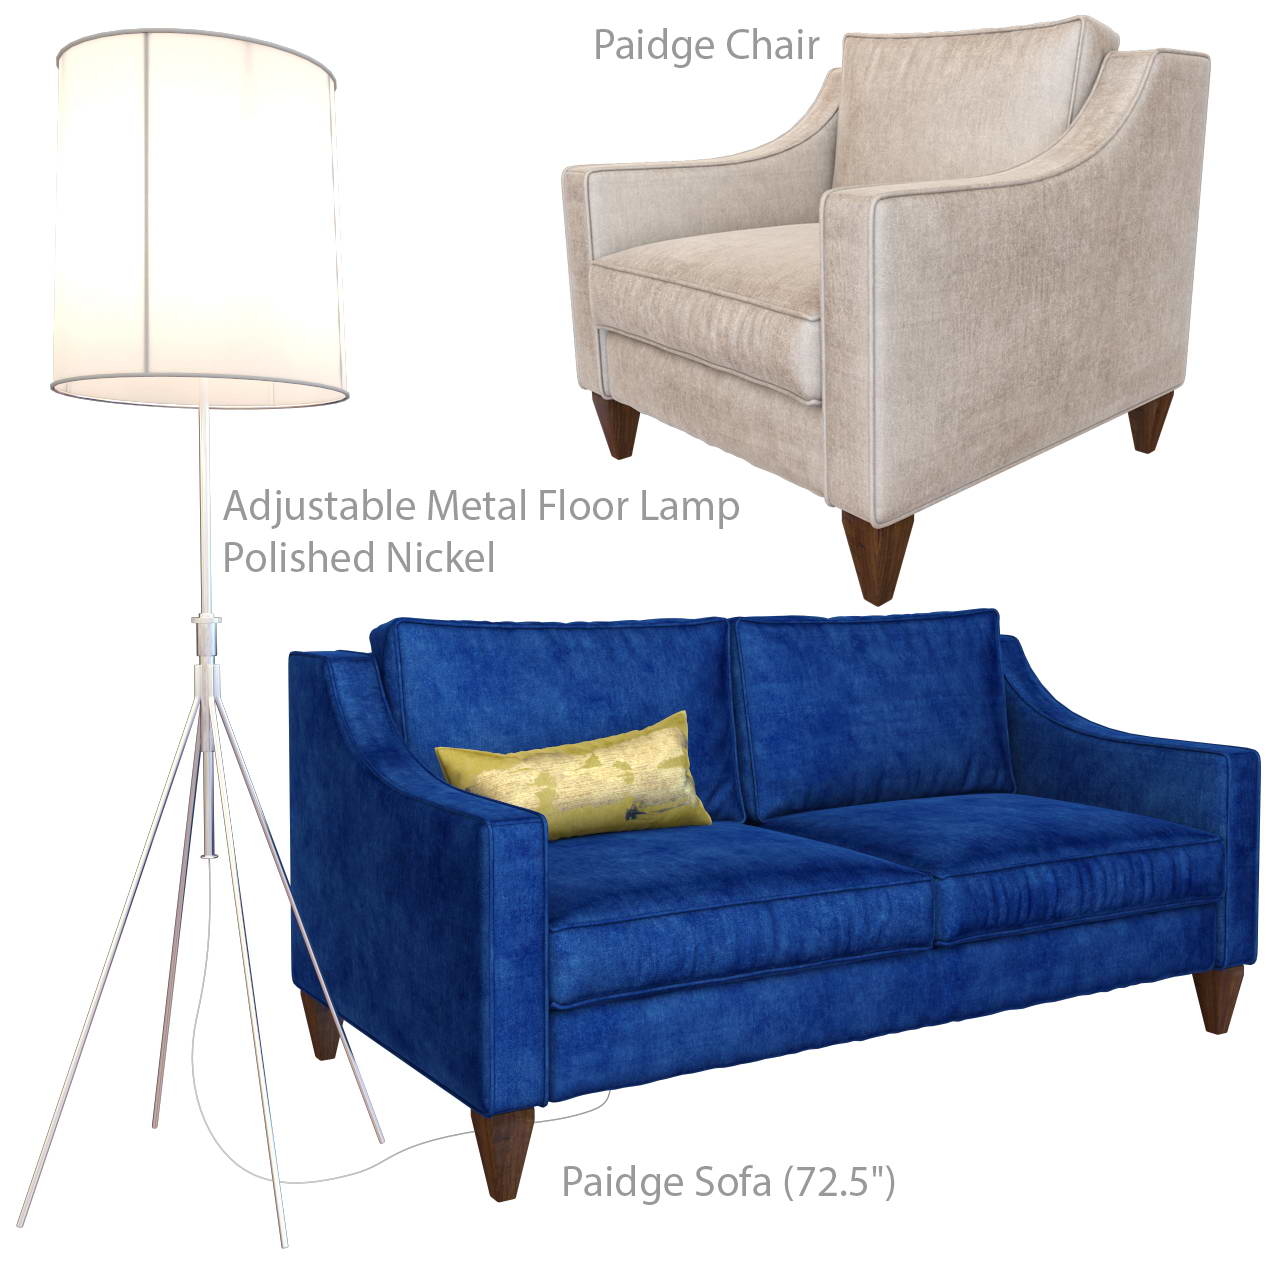 3d Paidge Sofa Chair Adjustable Turbosquid 1285995